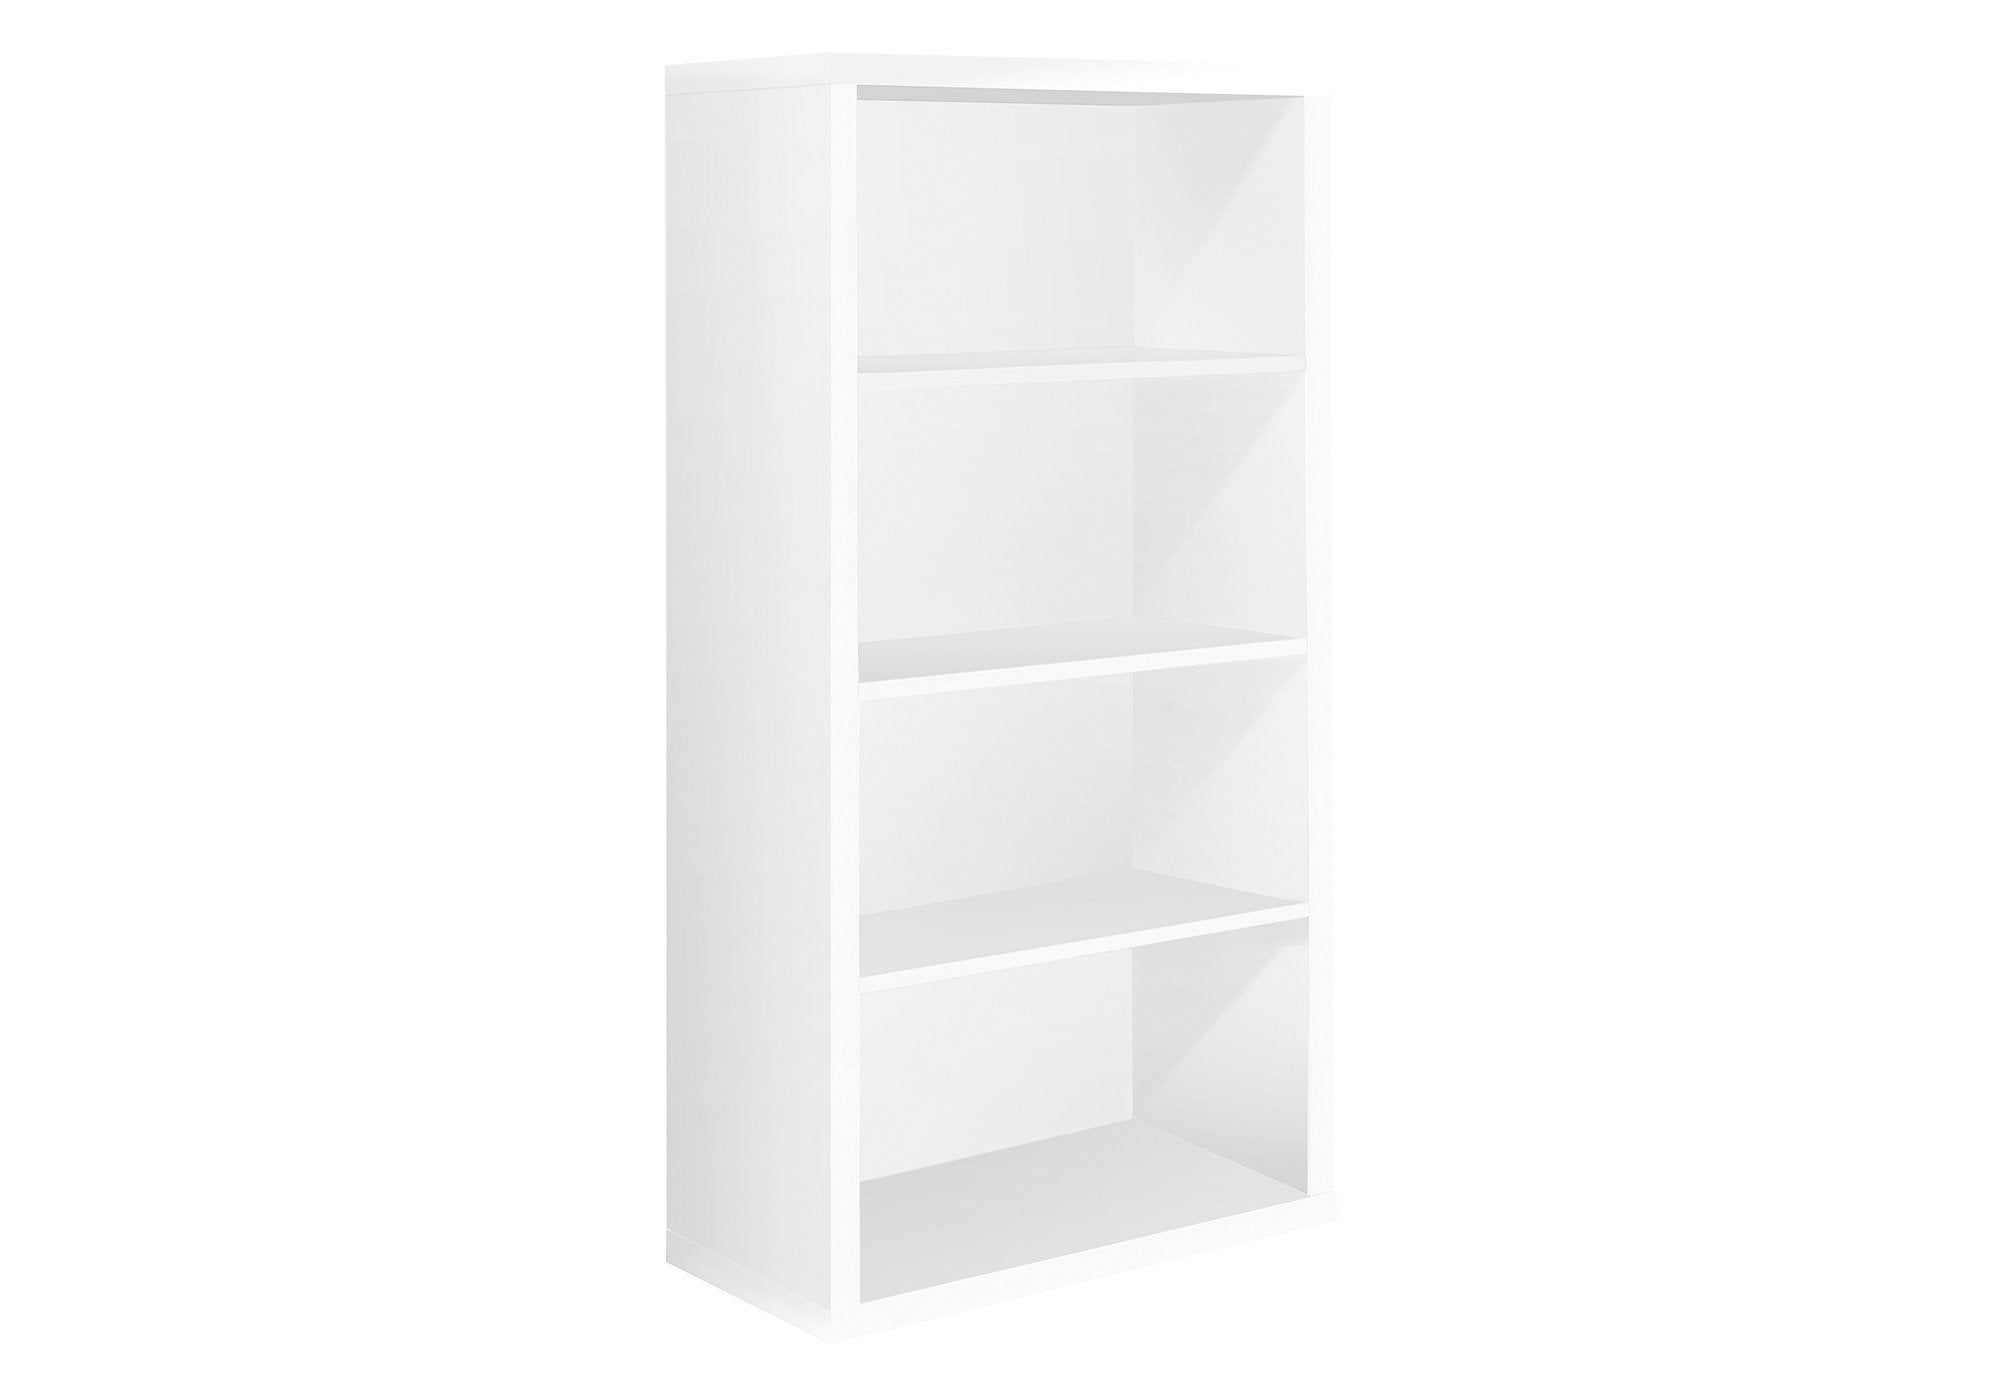 MN-877059    Bookshelf, Bookcase, Etagere, 5 Tier, Office, Bedroom, 48"H, Laminate, White, Contemporary, Modern